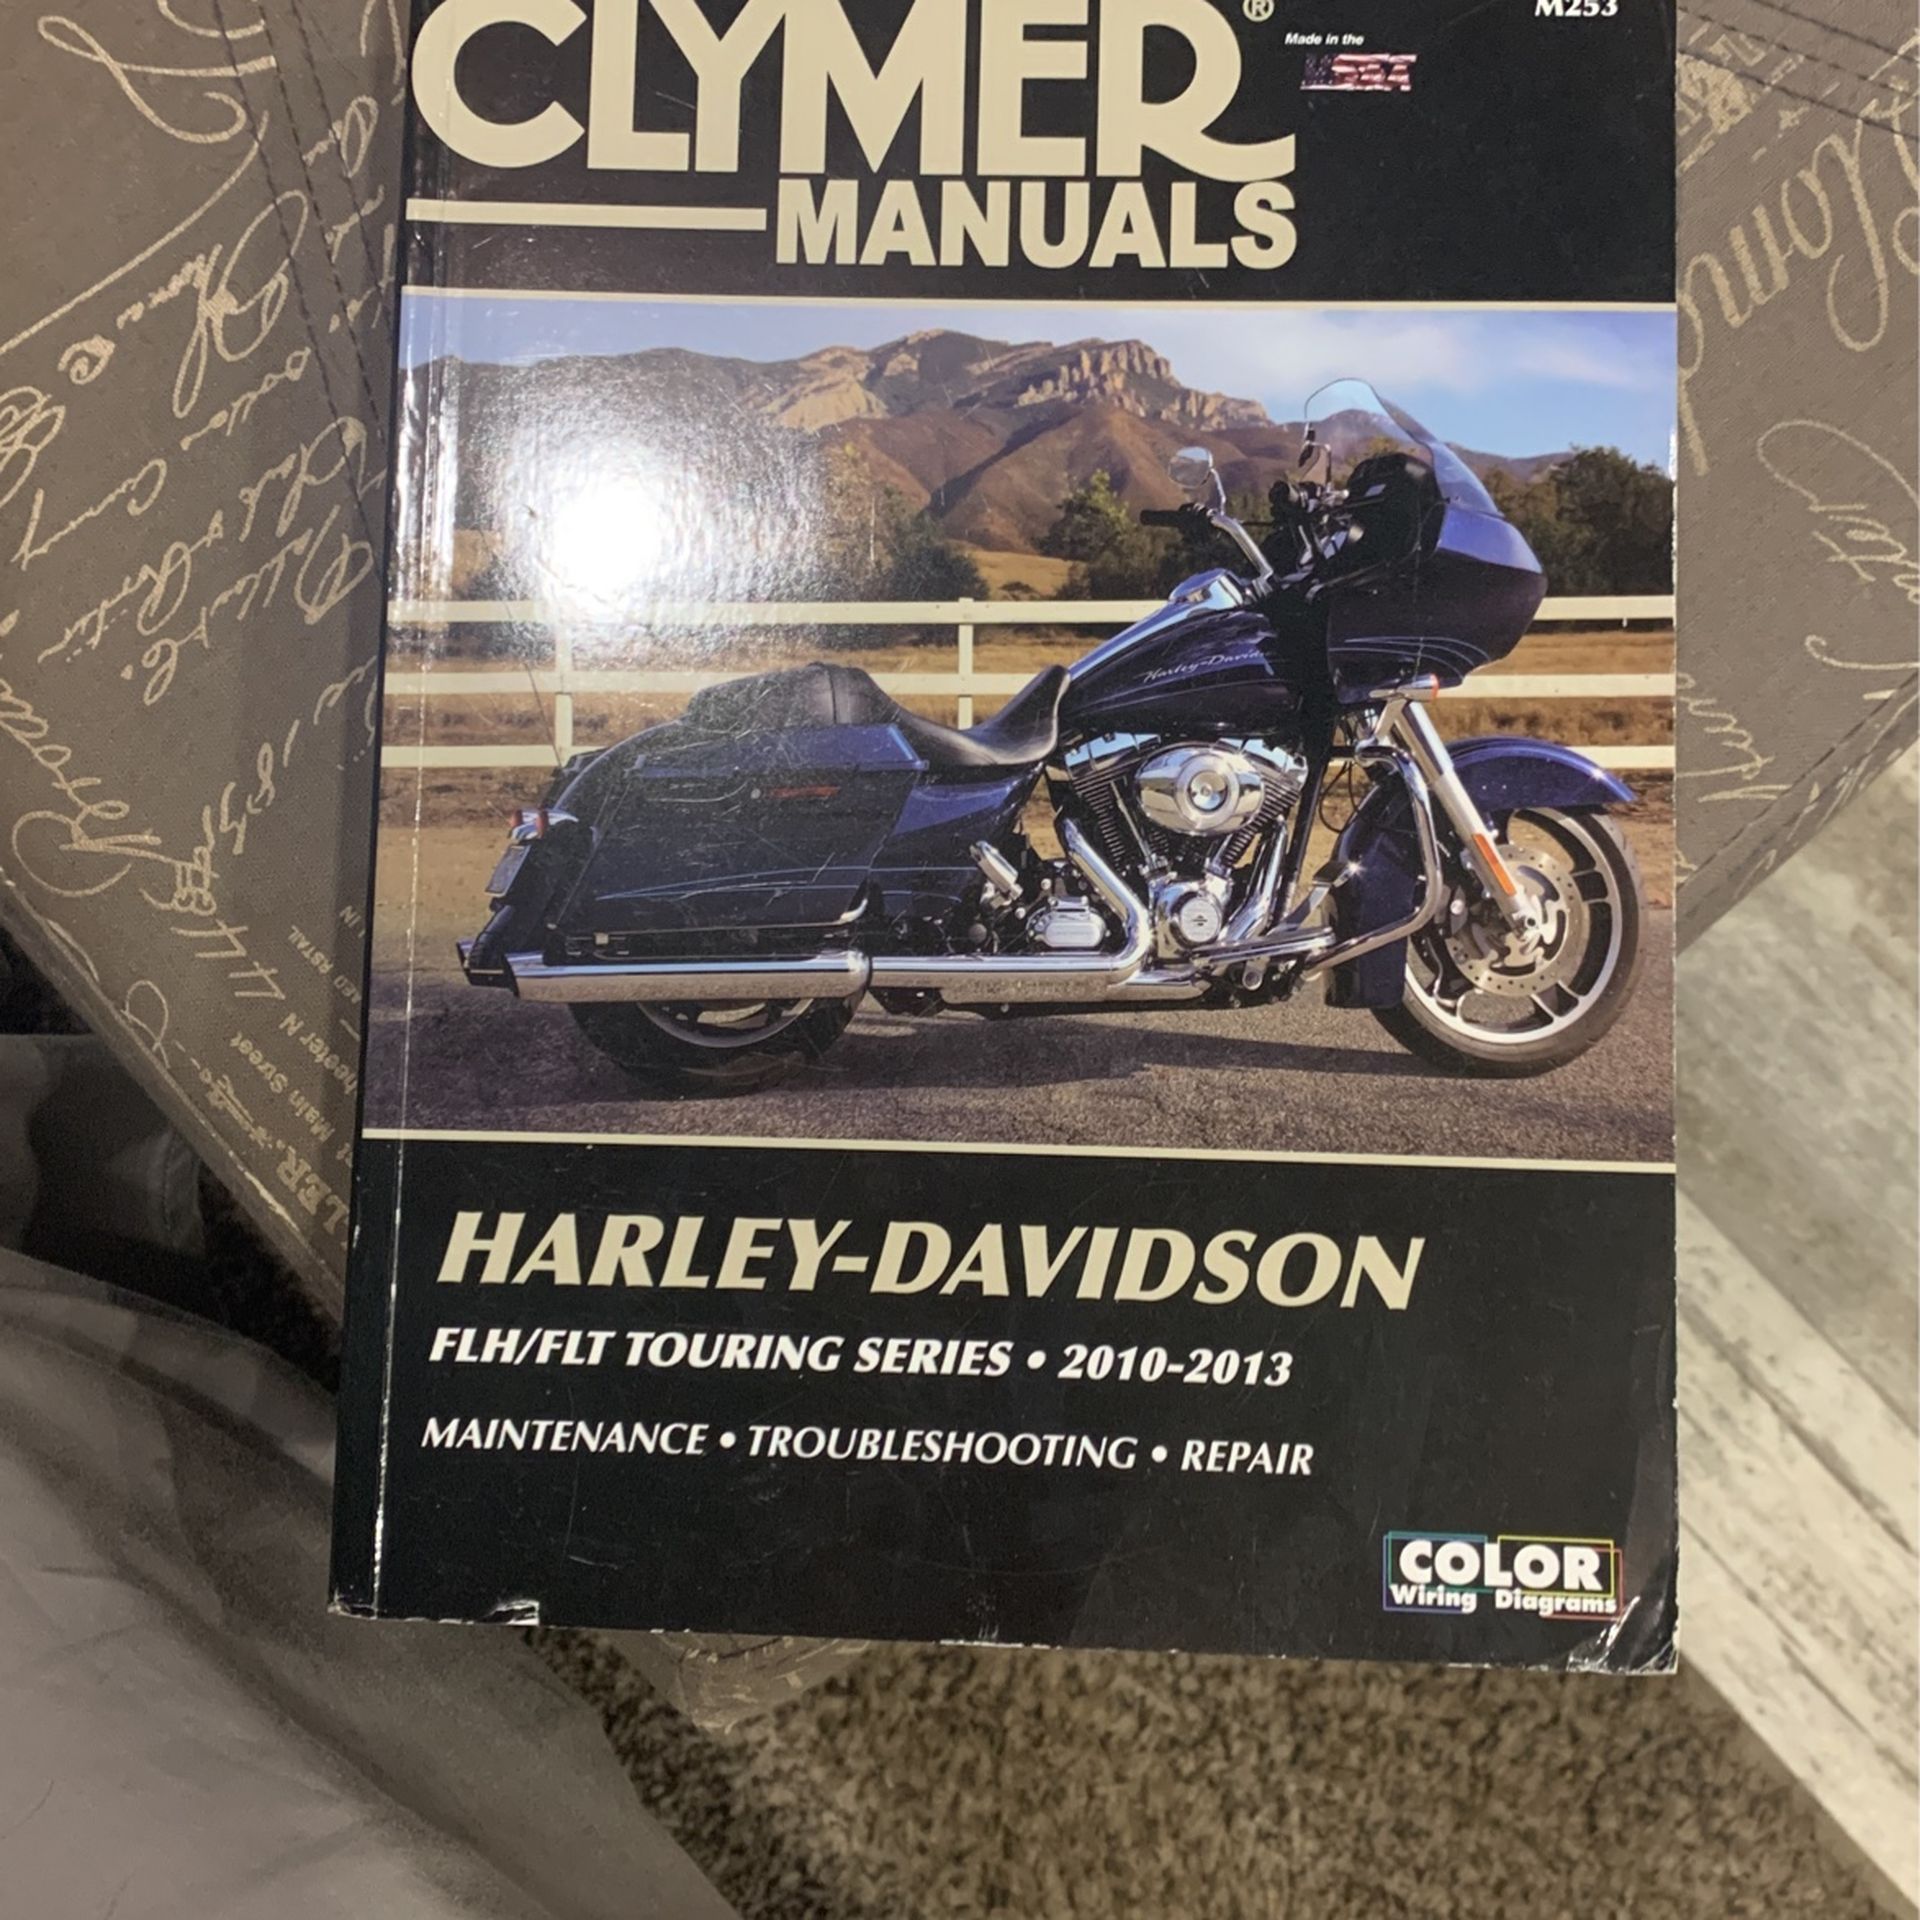 Harley Davidson Clymer Manual